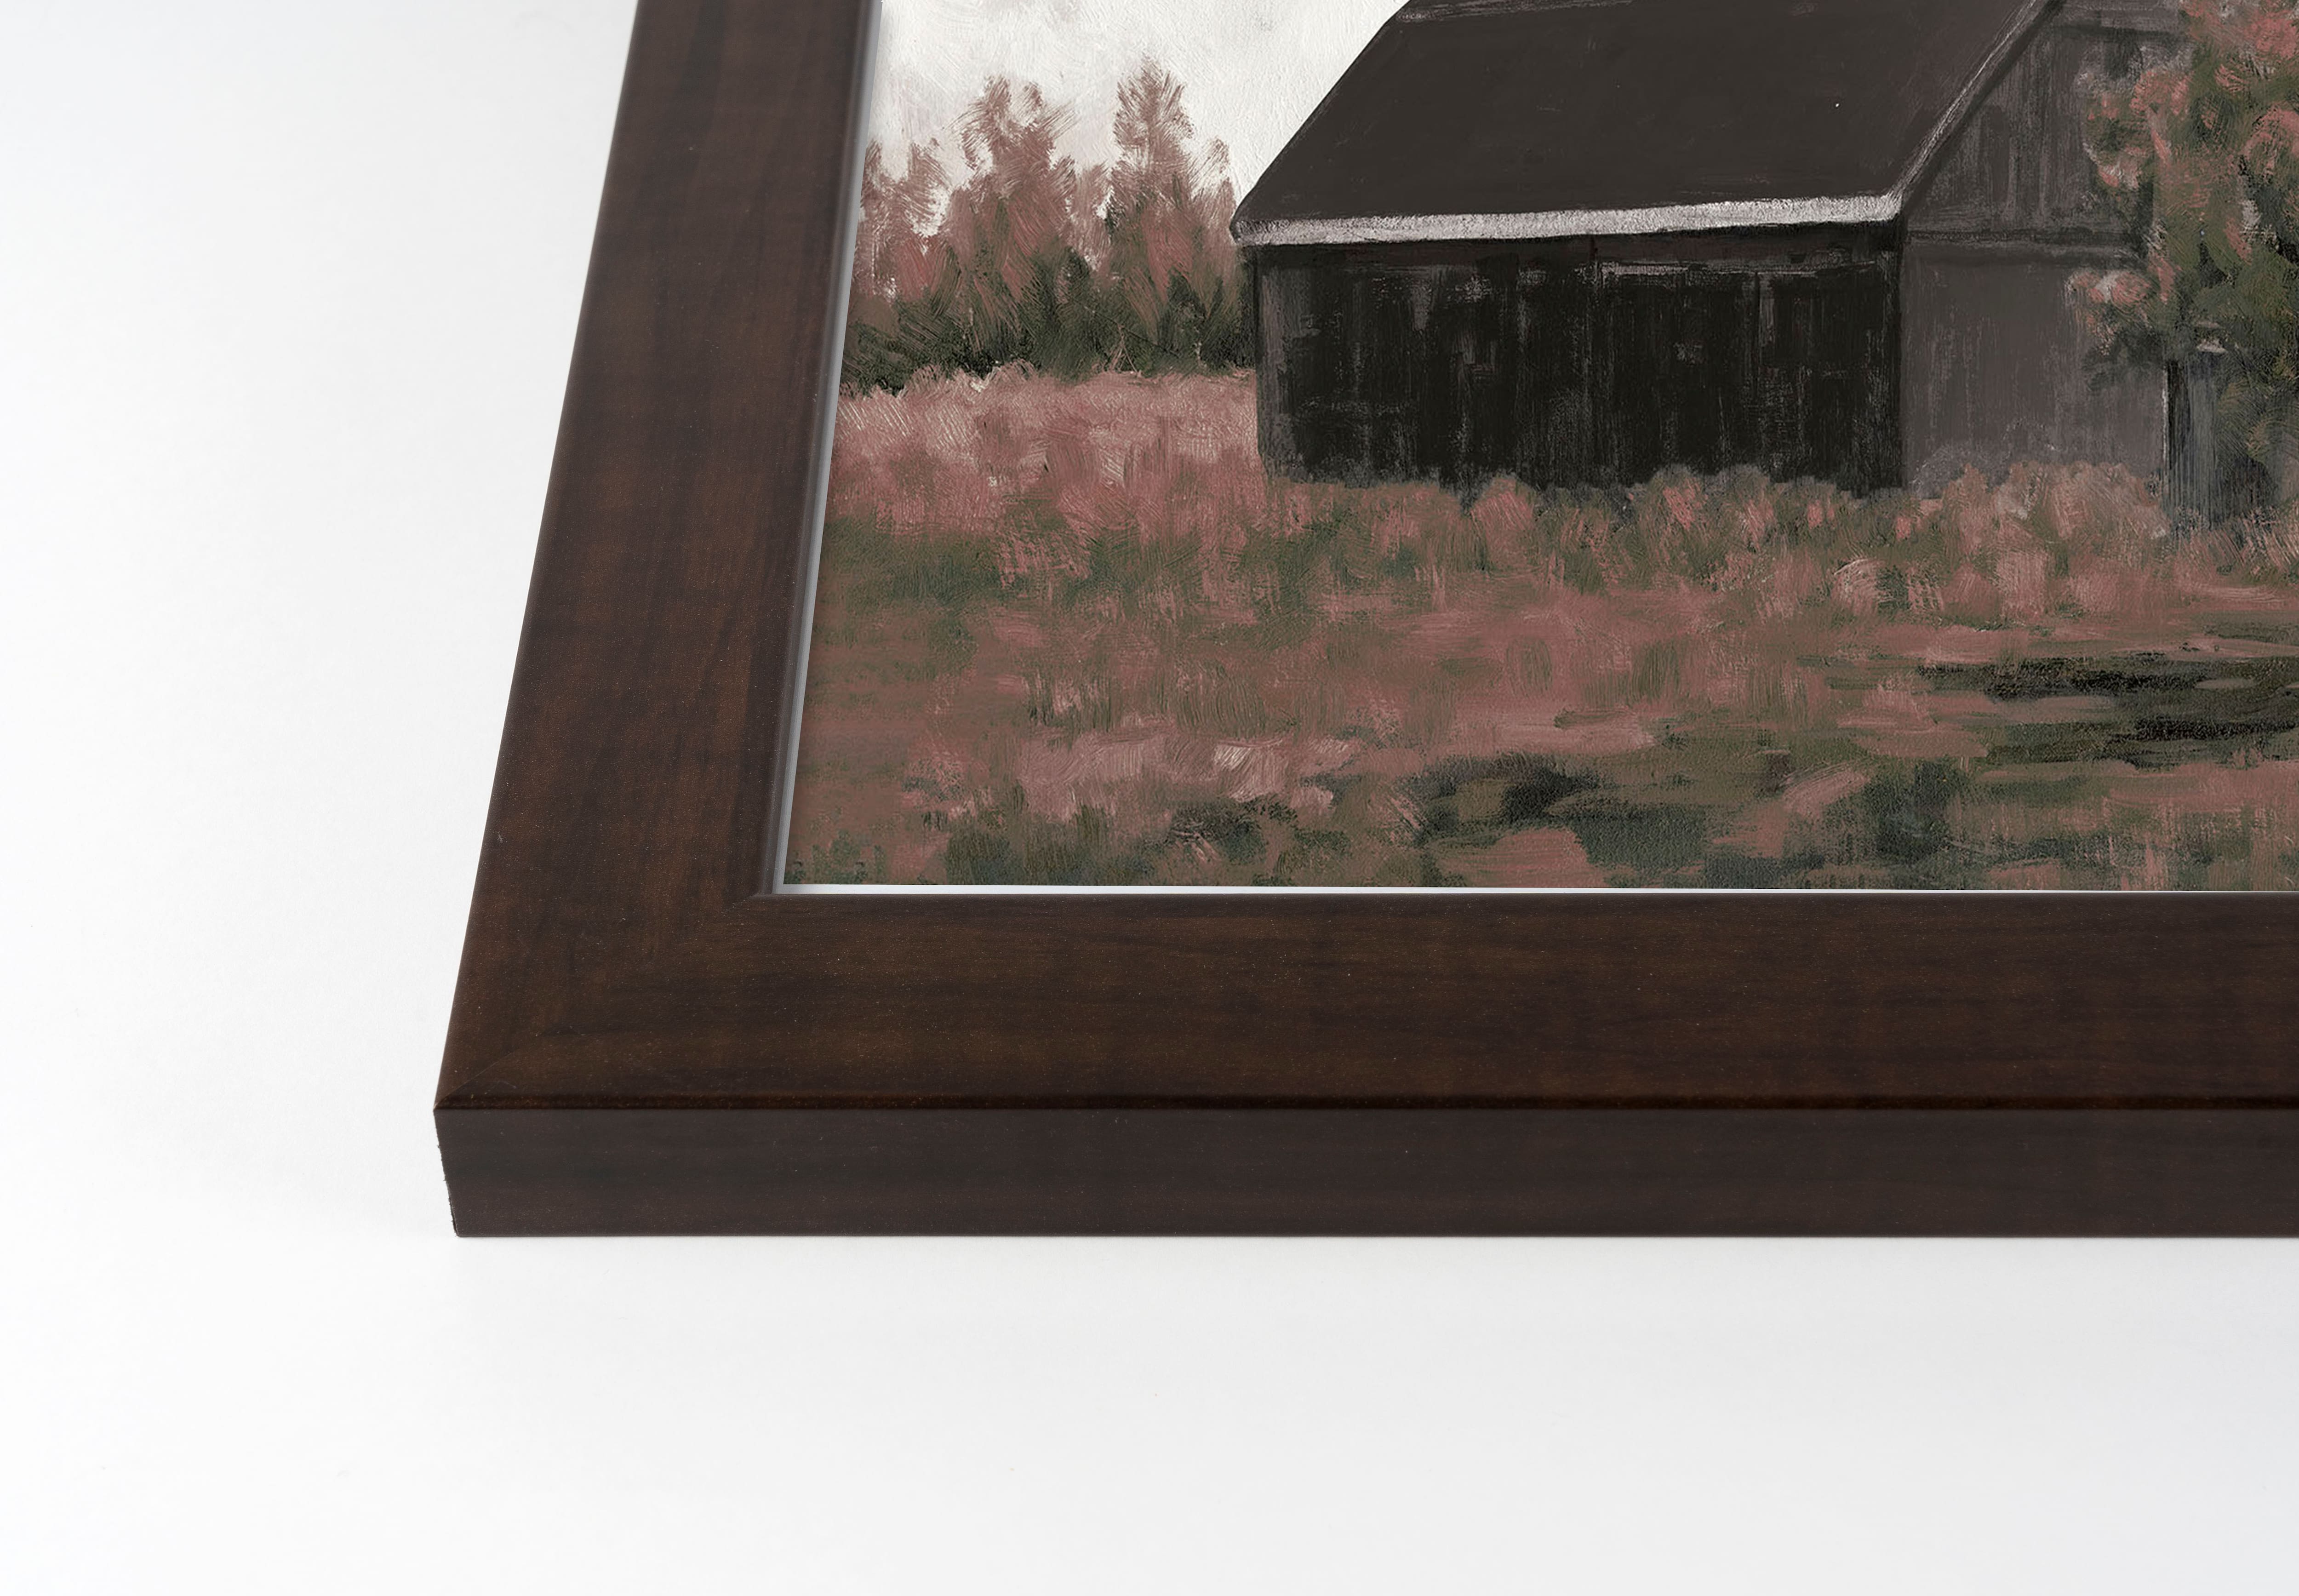 Black Barn Landscape Walnut Framed Print